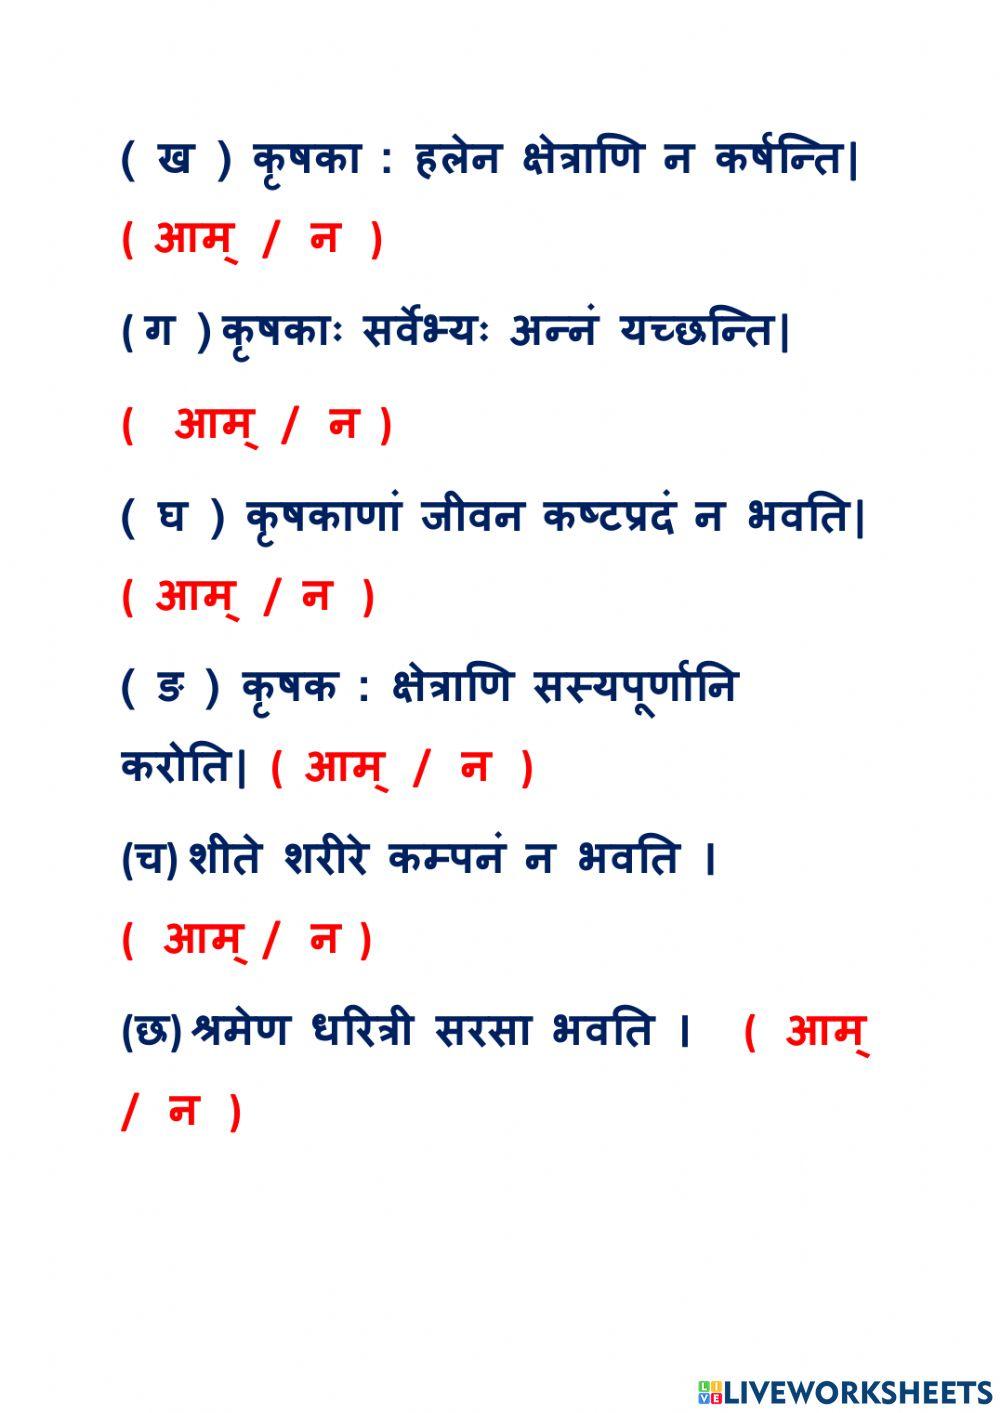 Liveworksheet class 6 sanskrit ch 10,14,15